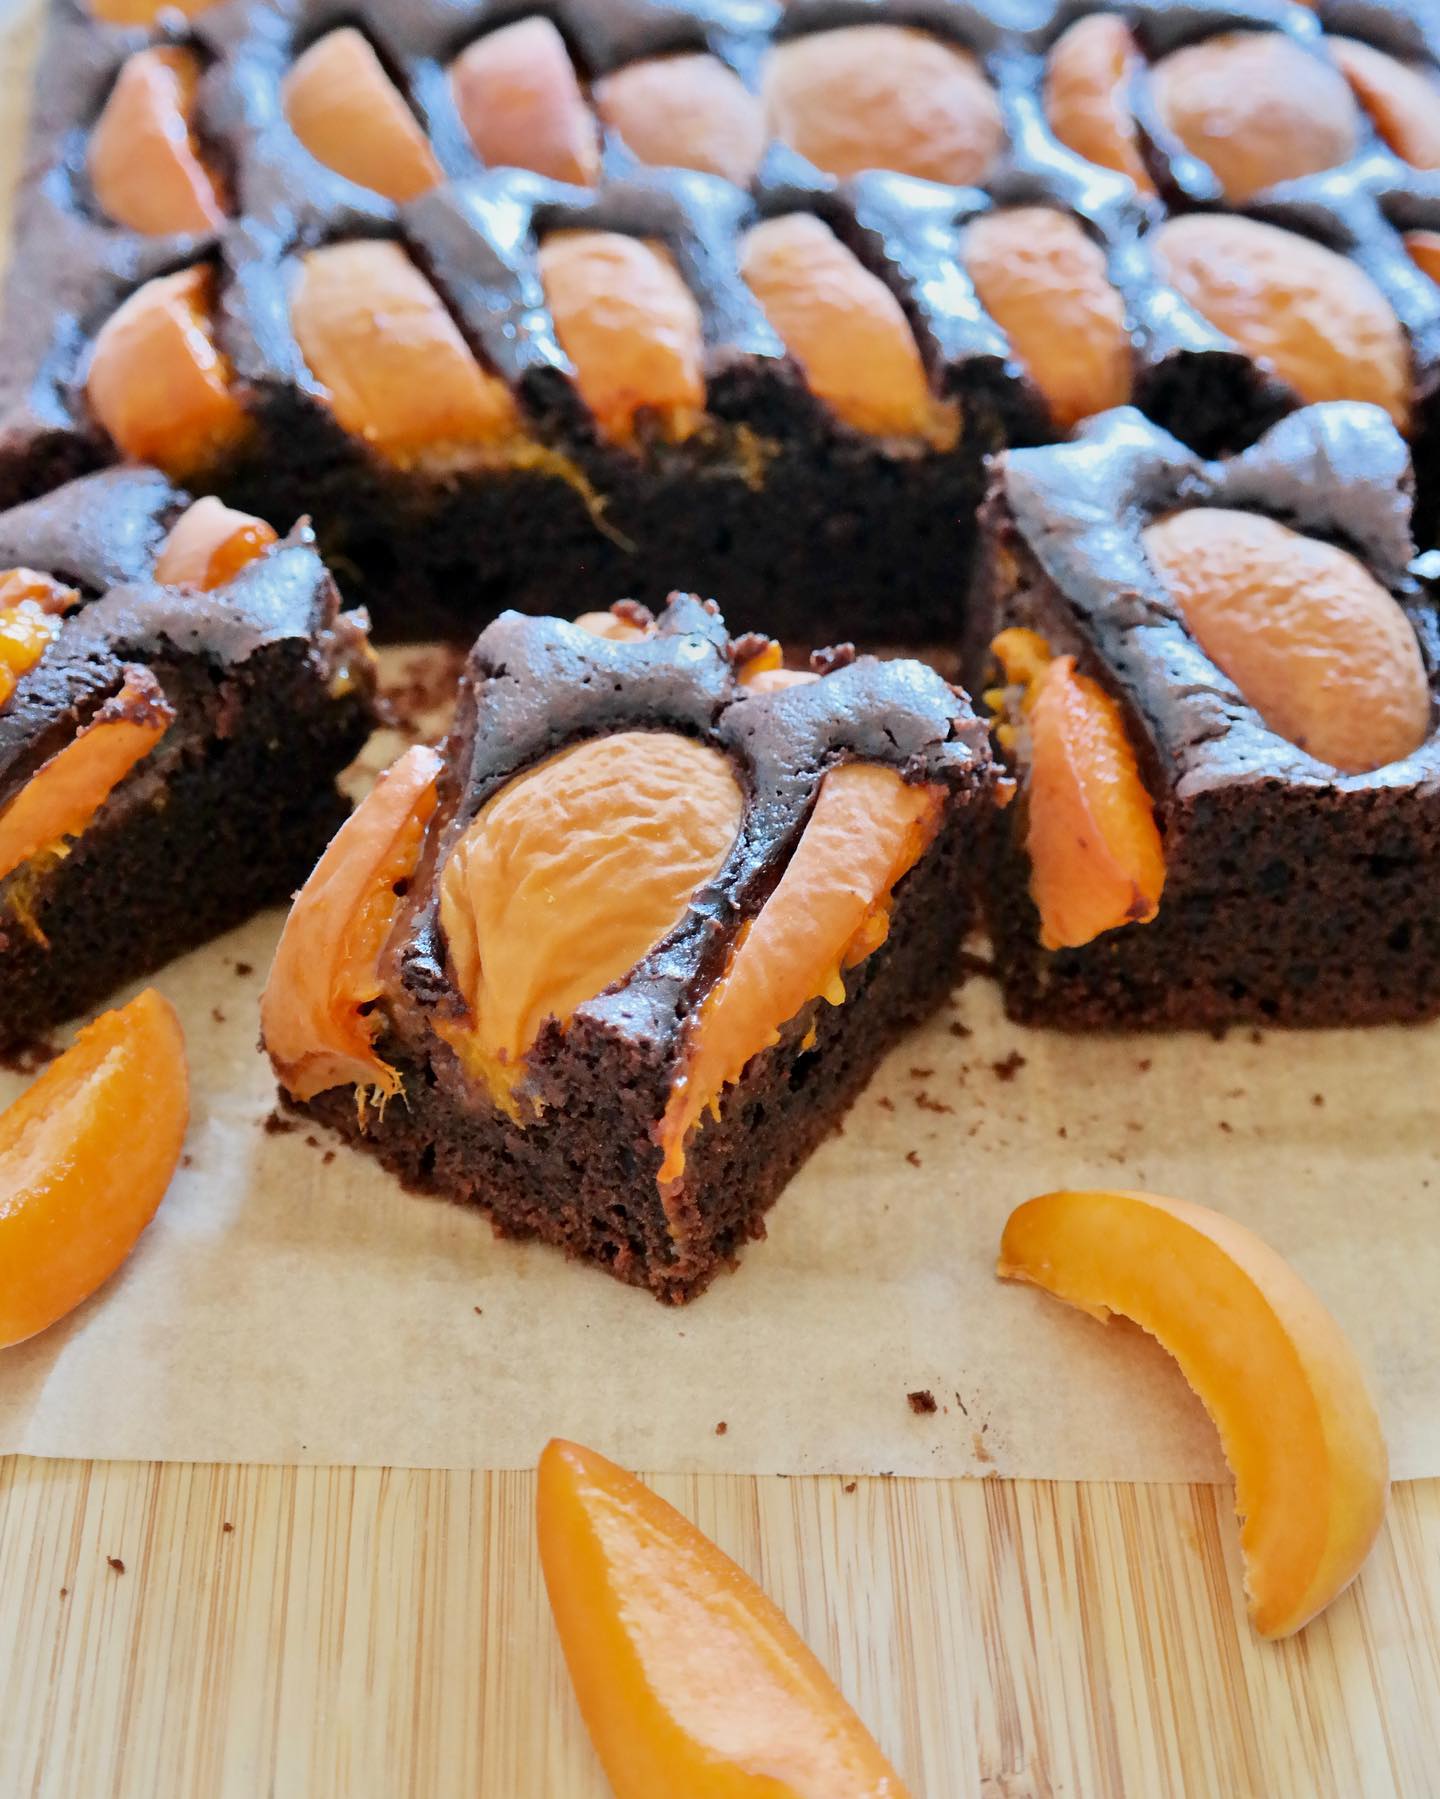 Chocolate + apricot = ❤️
.
.
.
.
#baking #bakinglove #bake #homebaked #homebaking #cake #chocolate #chocolatecake #apricot #ilovebaking #dessert #desserts #tasty #food #foodblogger #foodblog